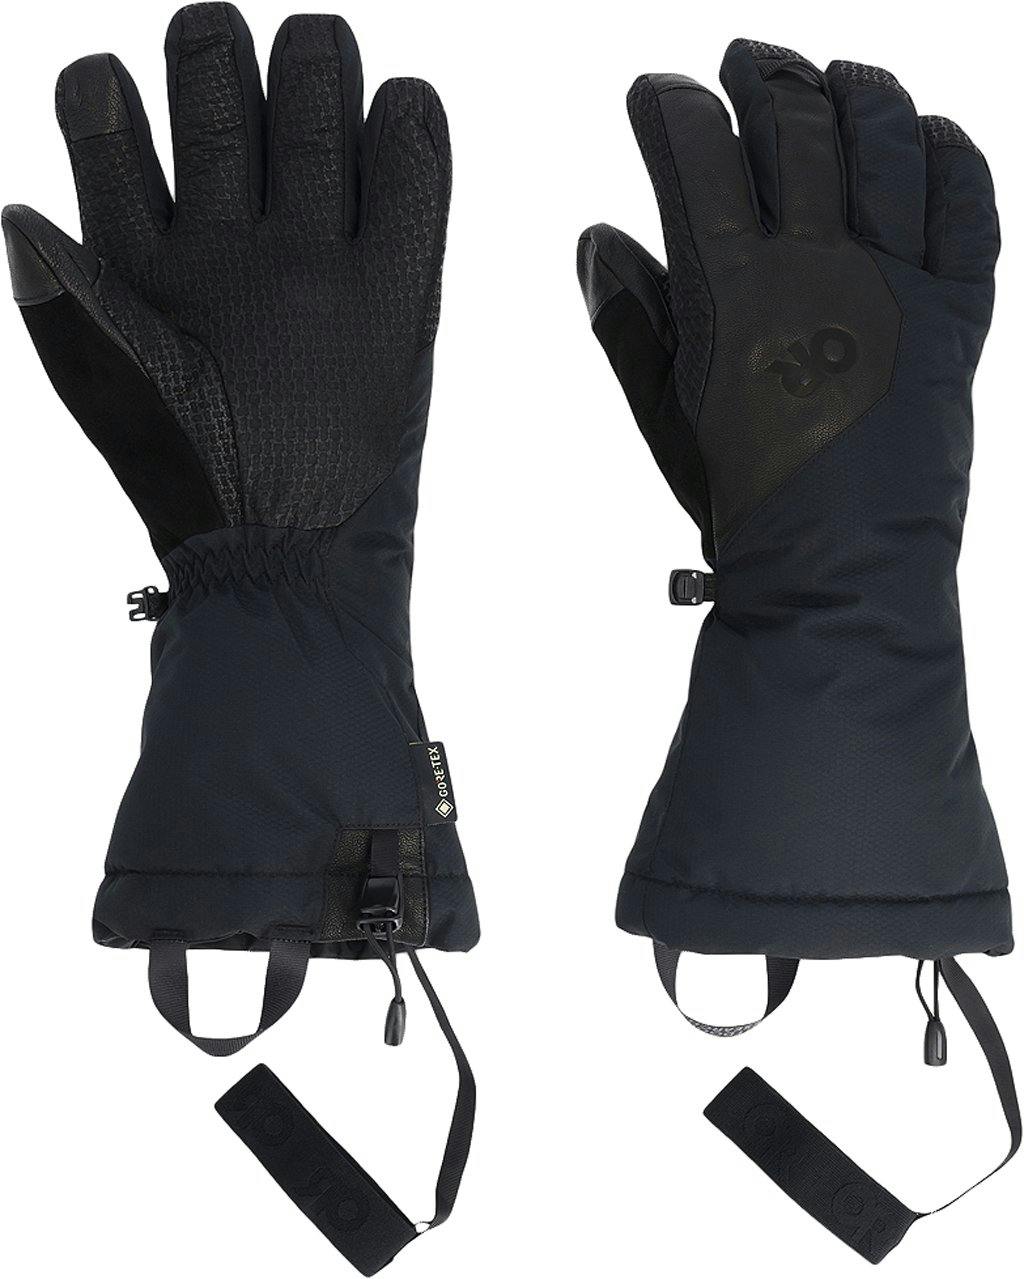 Product image for Super Couloir Sensor Gloves - Men's